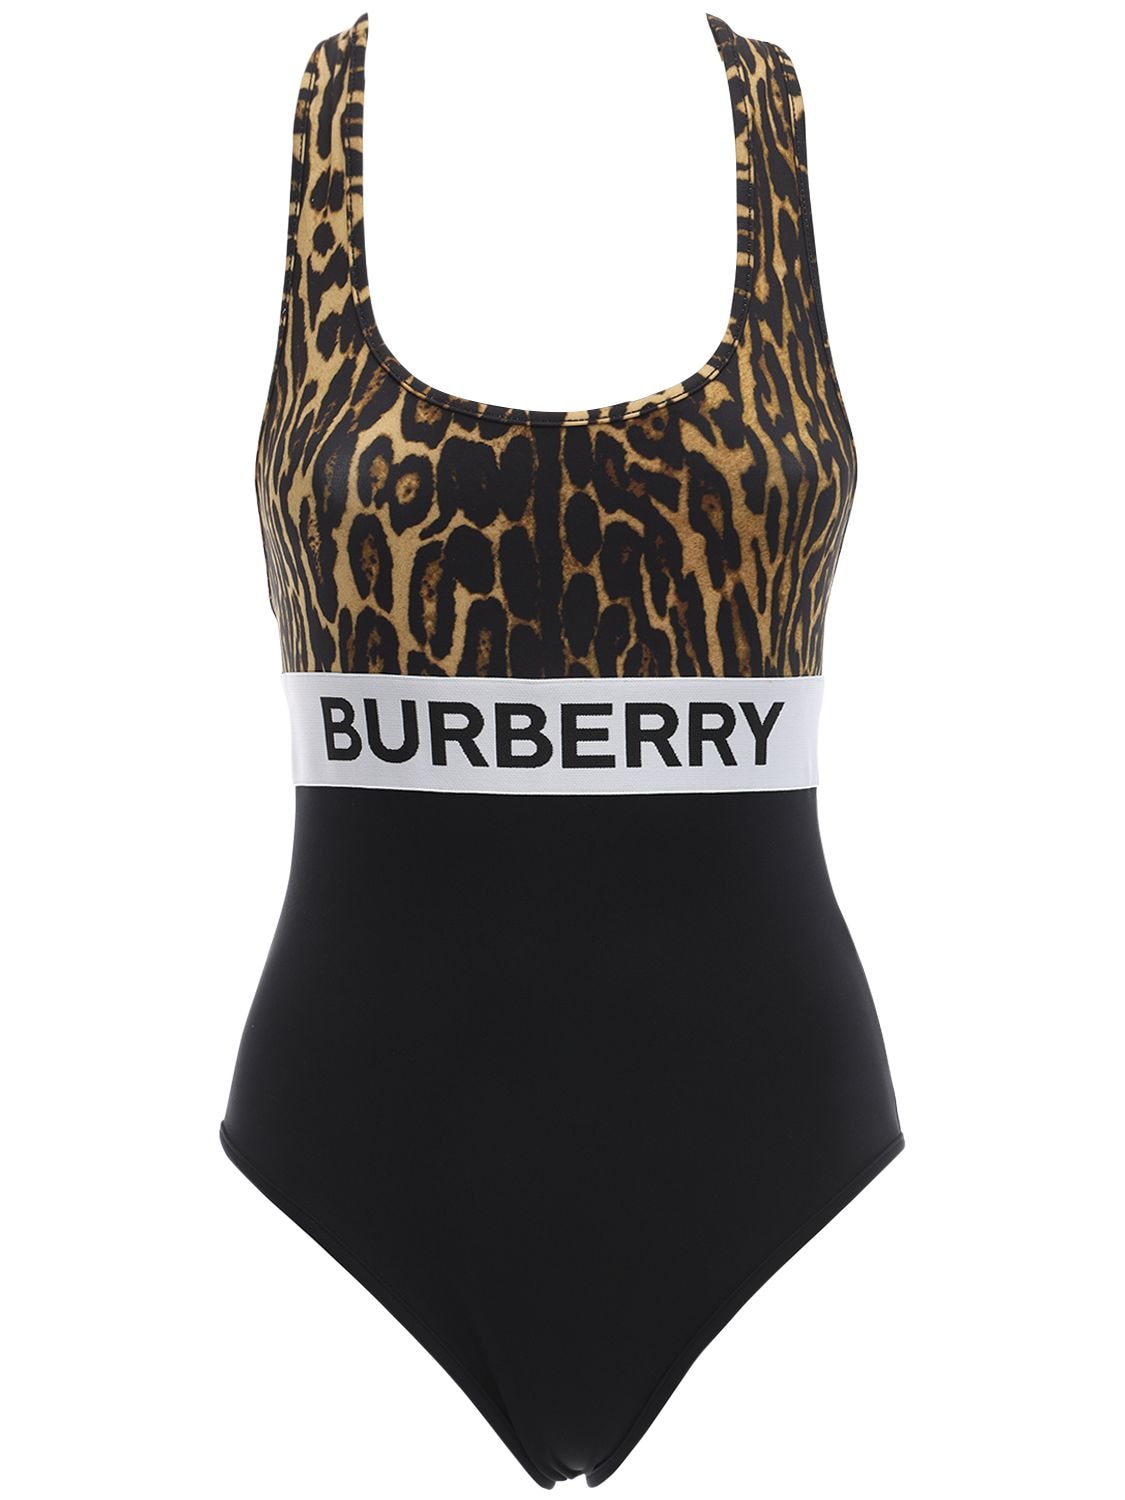 BURBERRY Leopard Print Lycra One Piece Swimsuit for Women